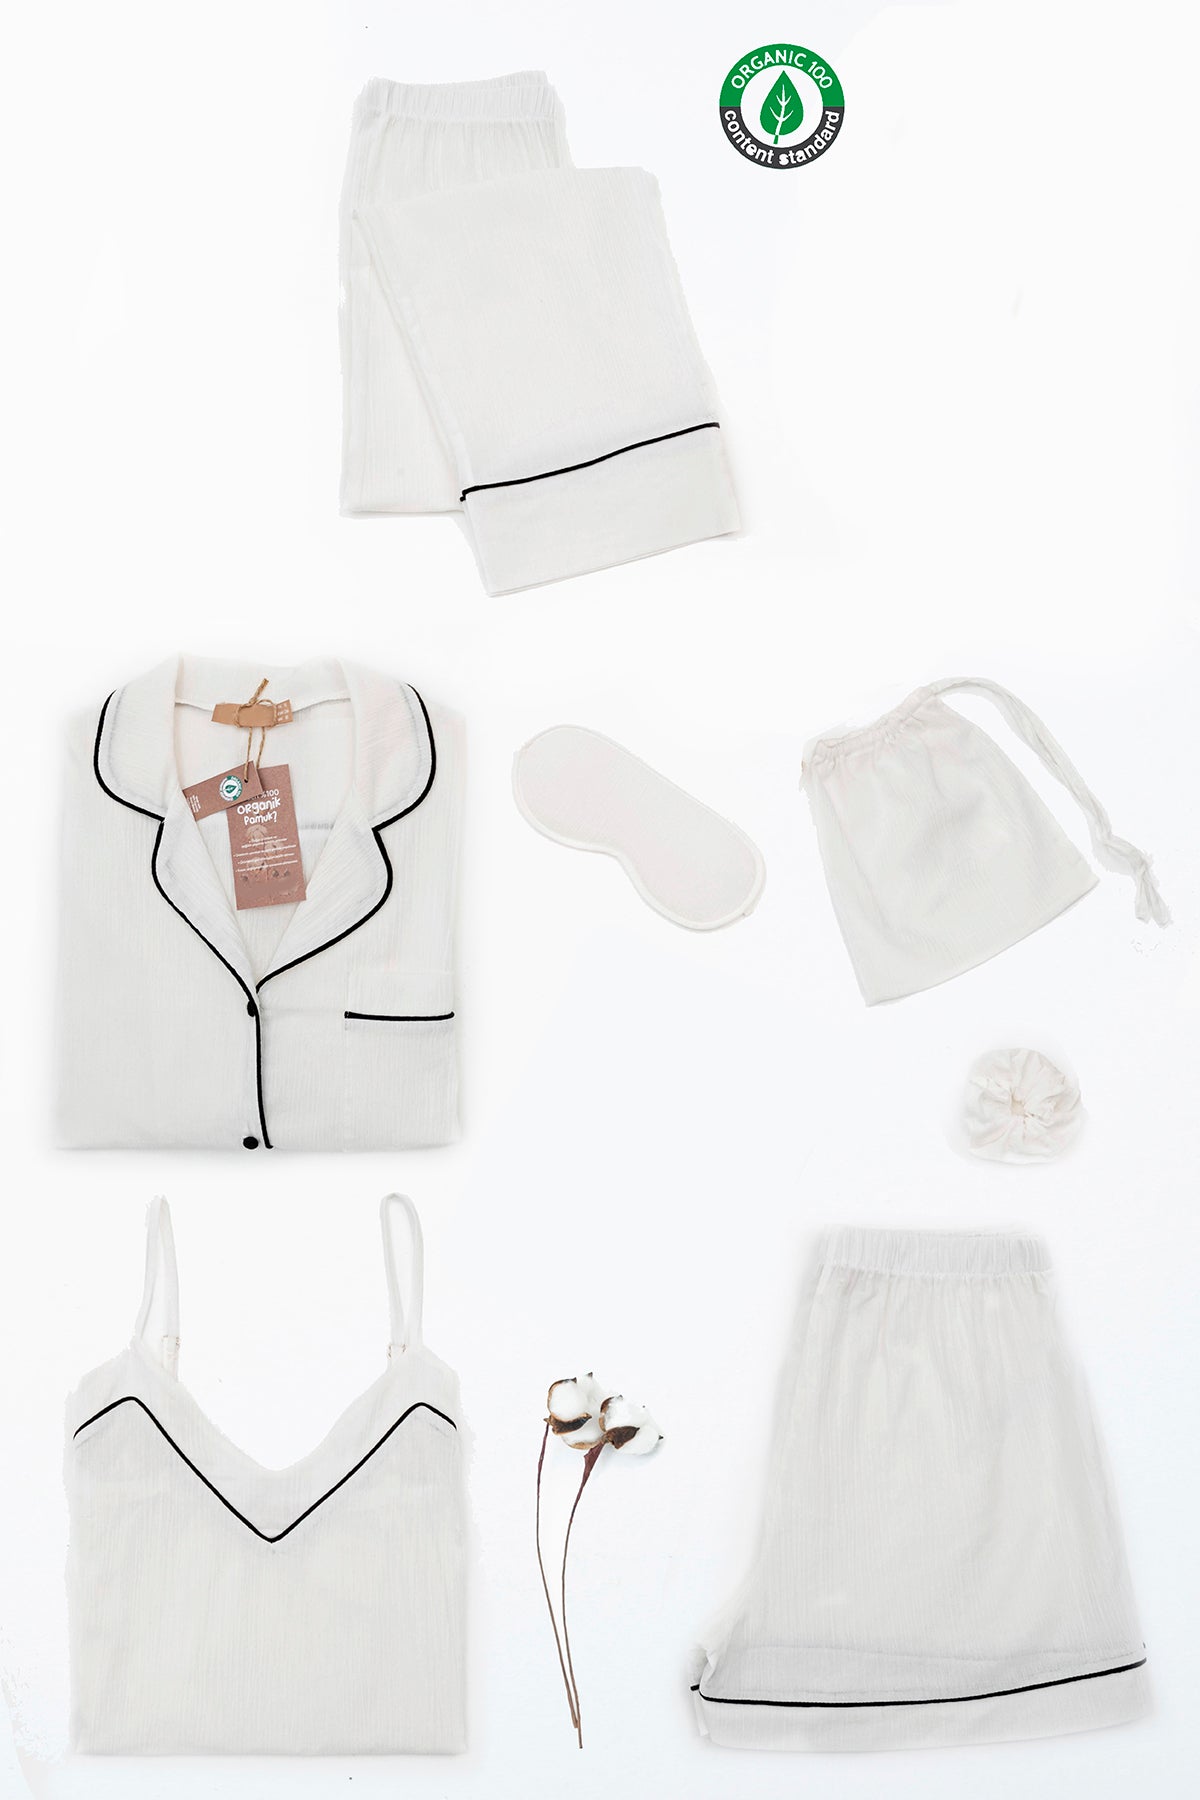 Flora - Pyjama Set - Ecru Weiß - 7 Teile